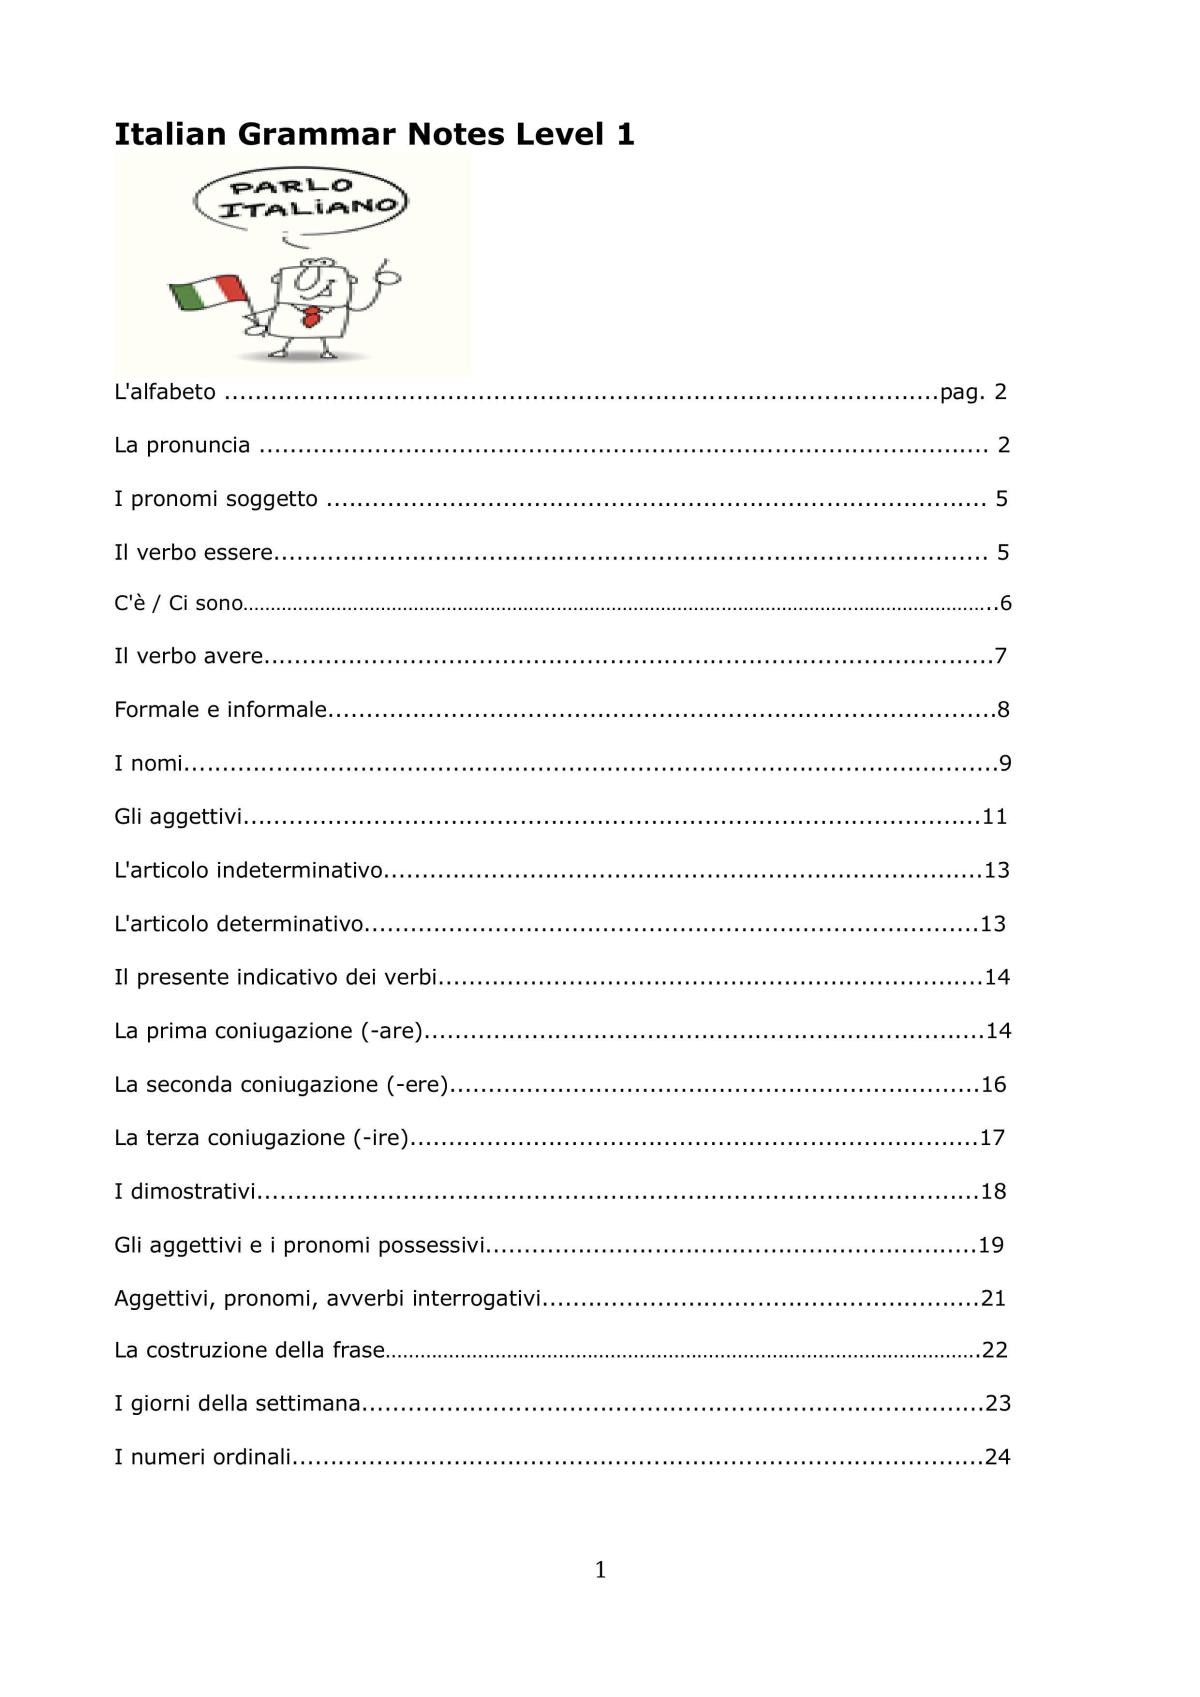 LG9001 Grammar Notes - Page 1